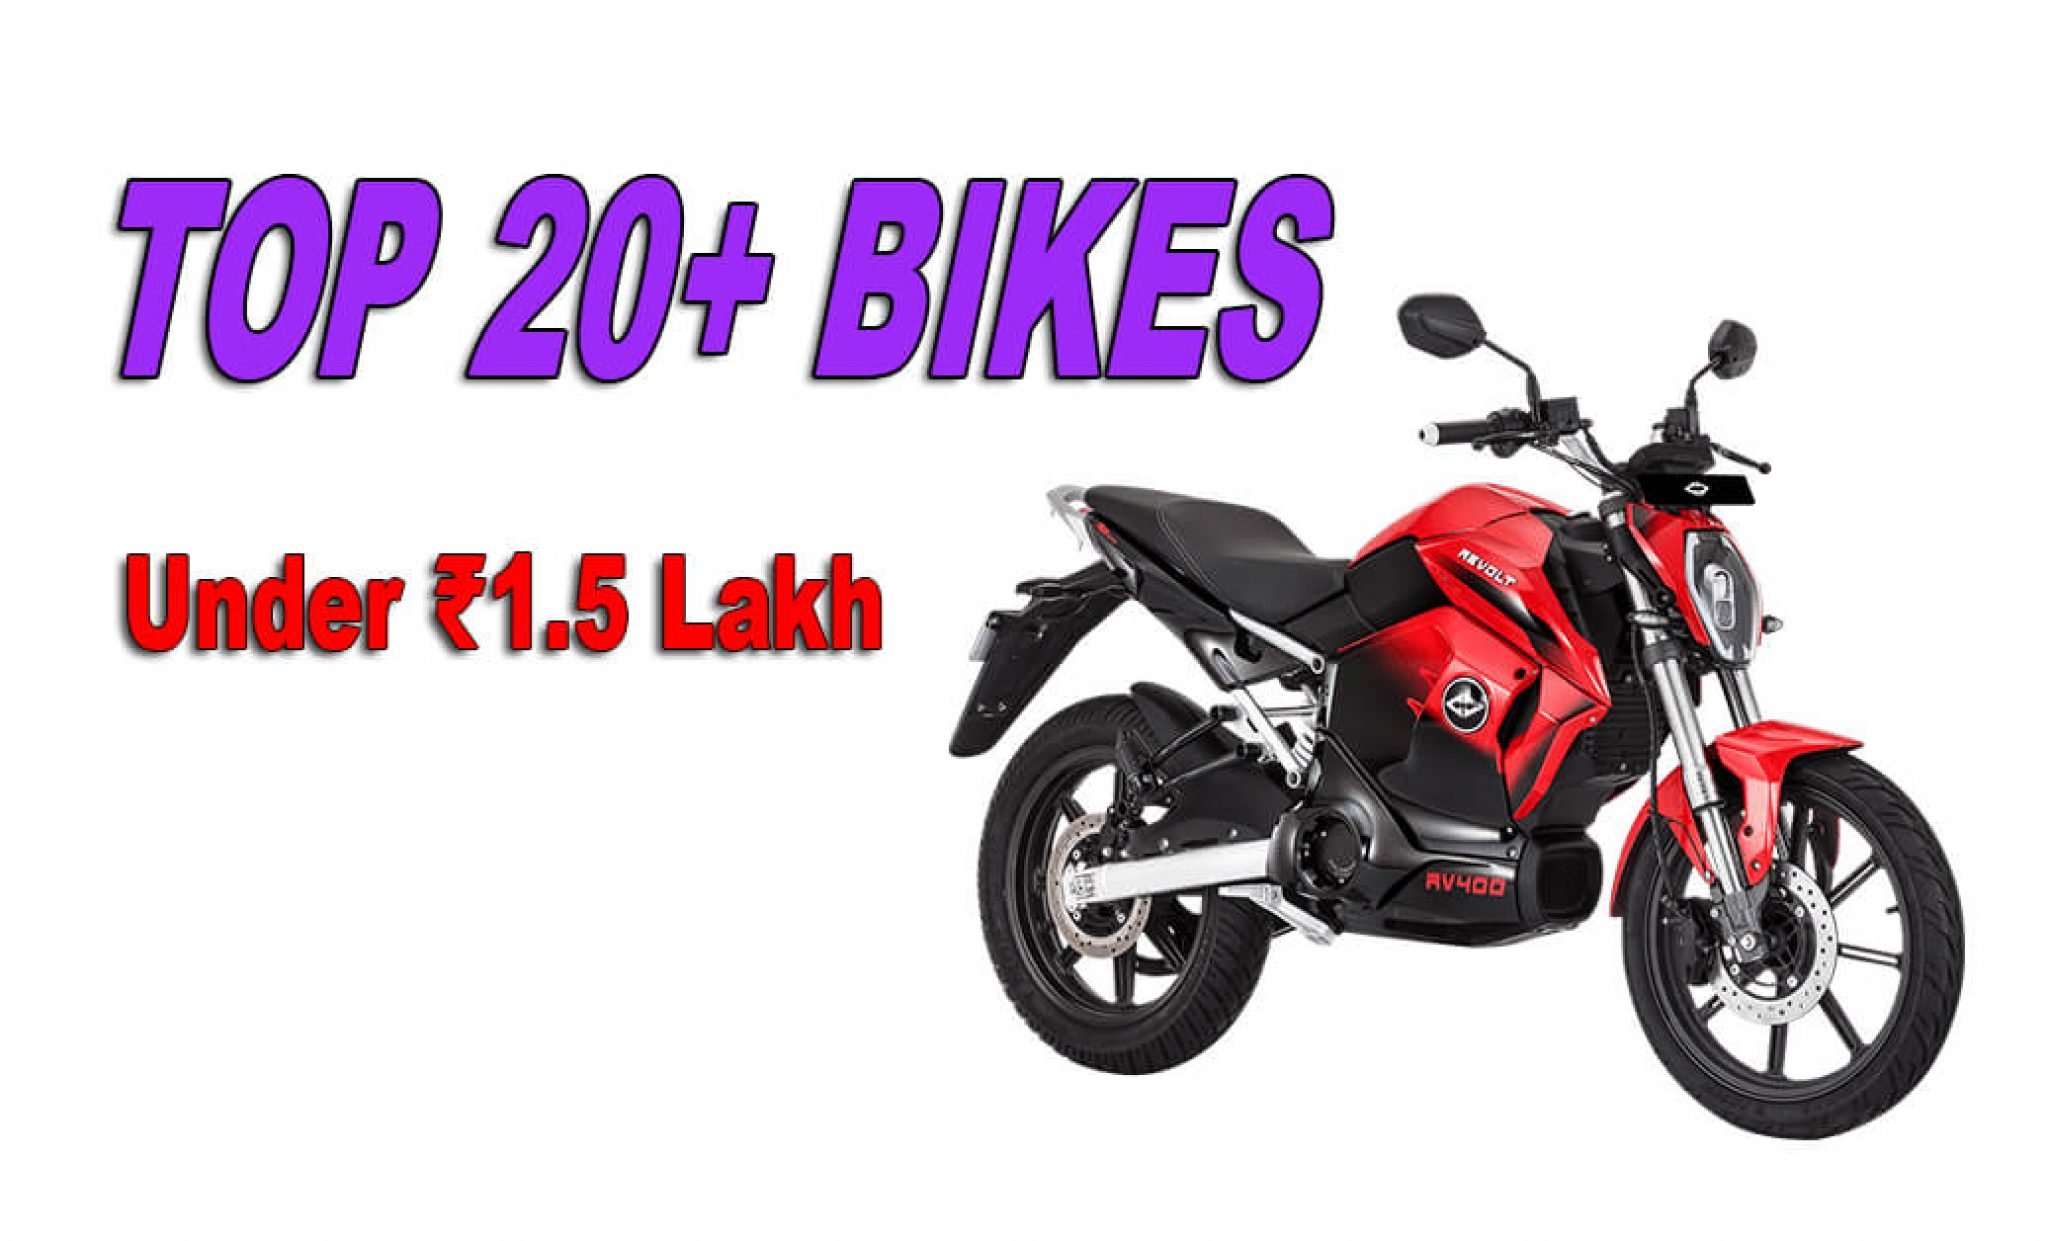 20+ Best Bikes Under 1.5 Lakh in India (2021) MotoBike.in